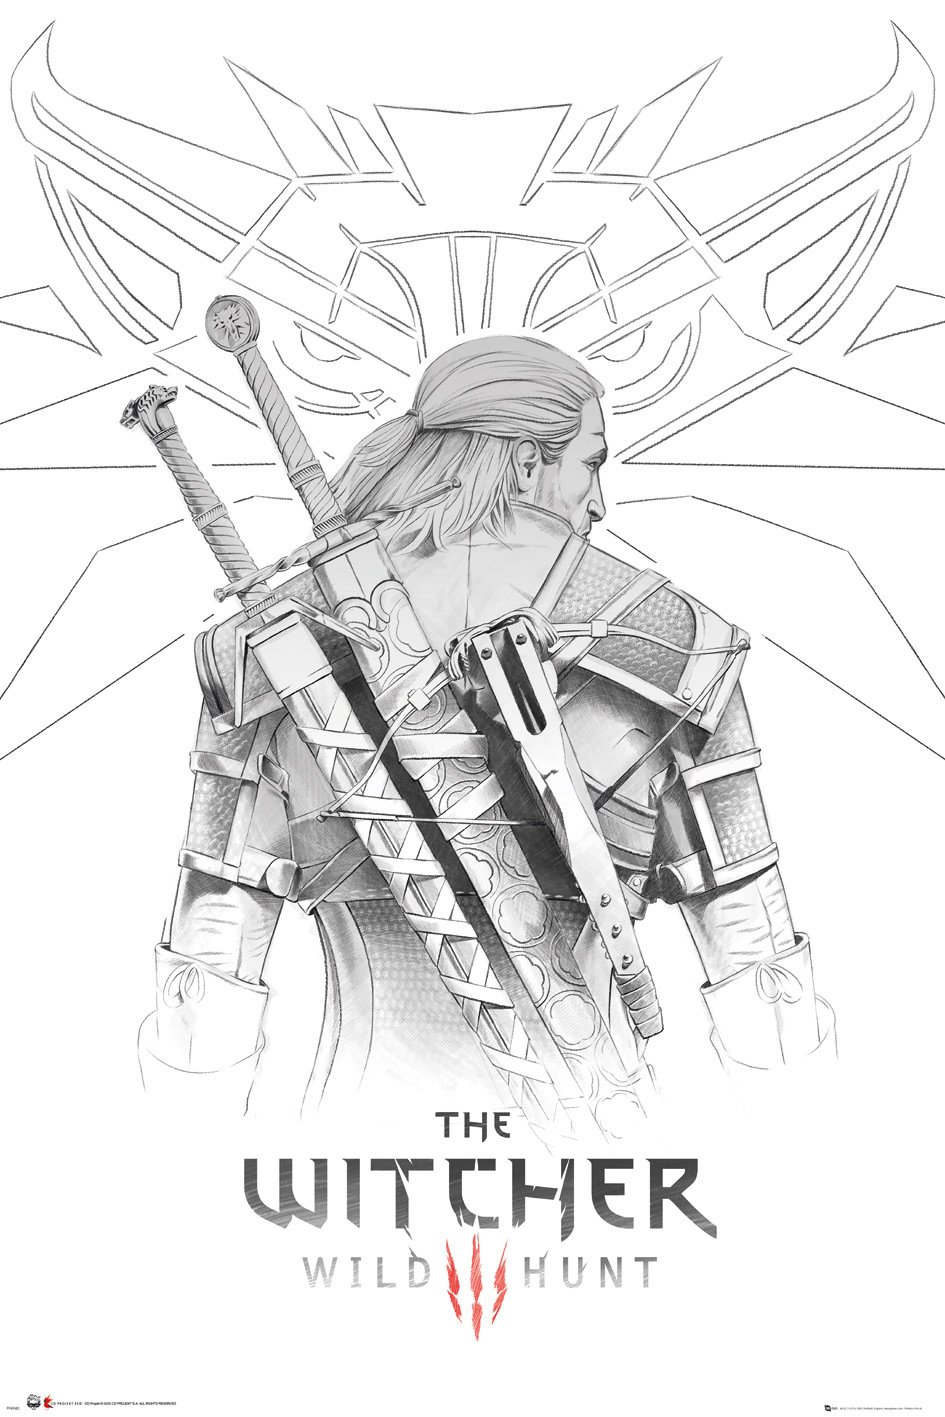 Poster - The Witcher, Wild Hunt: Geralt Sketch | GB Eye